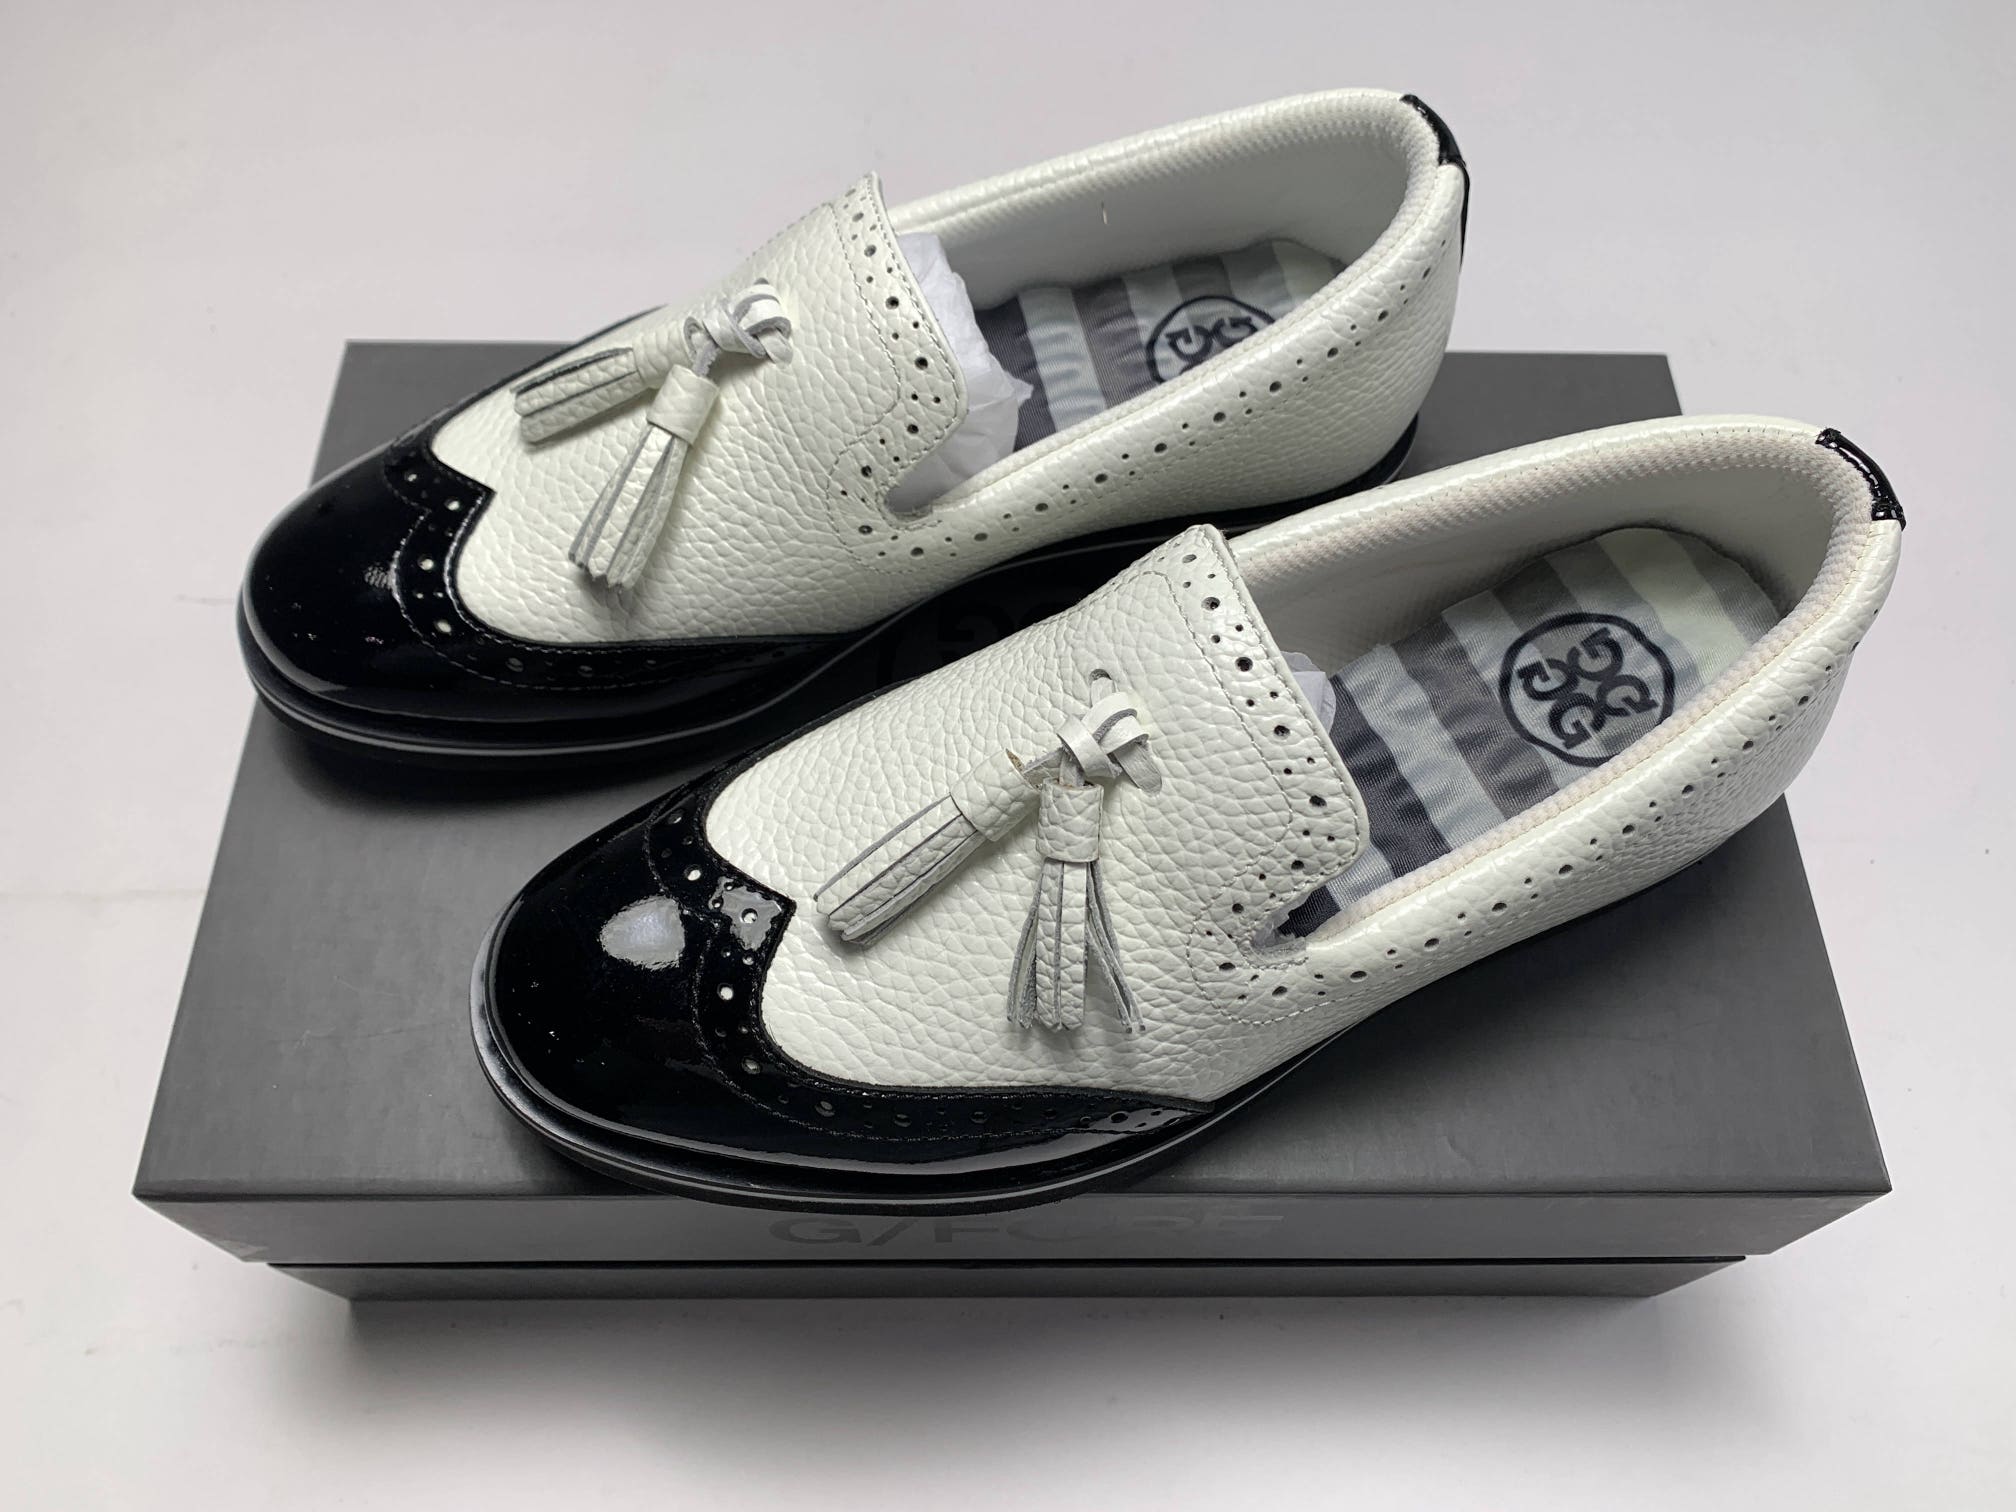 G/Fore Ladies Brogue Cruiser Golf Shoes White Women's SZ 7.5 (G4LS20EF09)